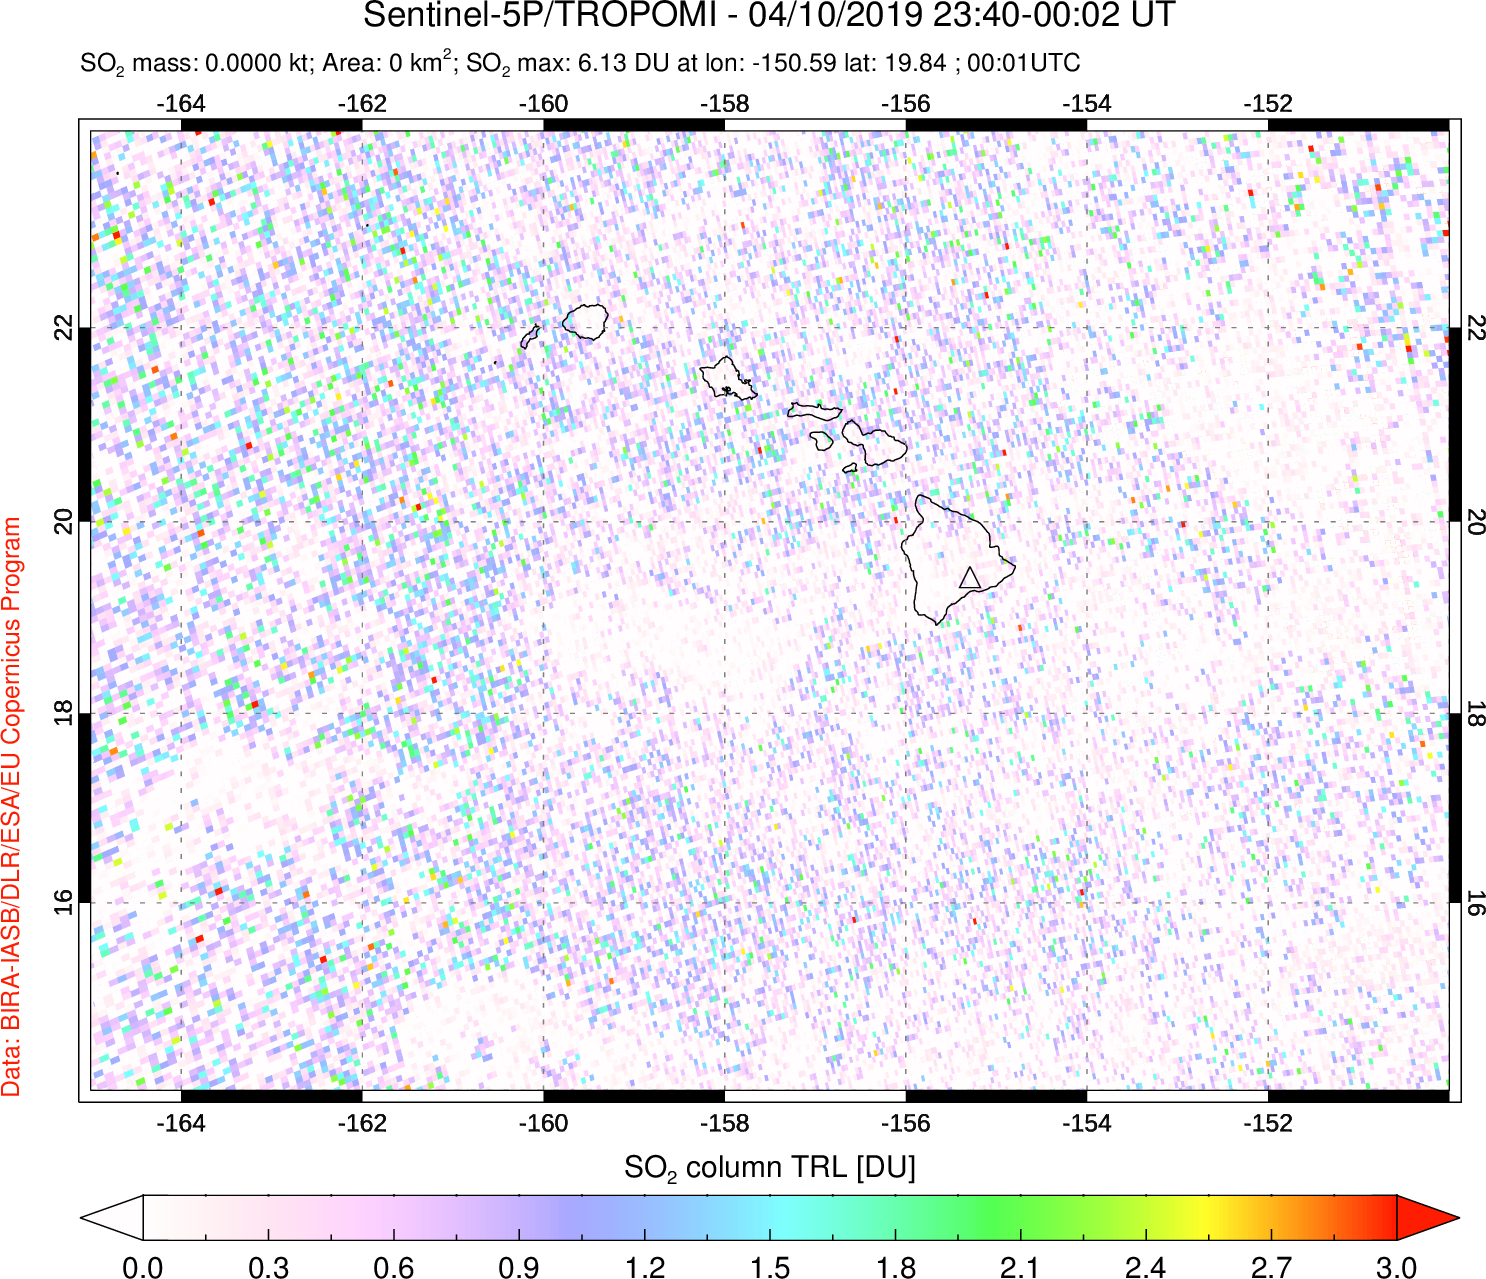 A sulfur dioxide image over Hawaii, USA on Apr 10, 2019.